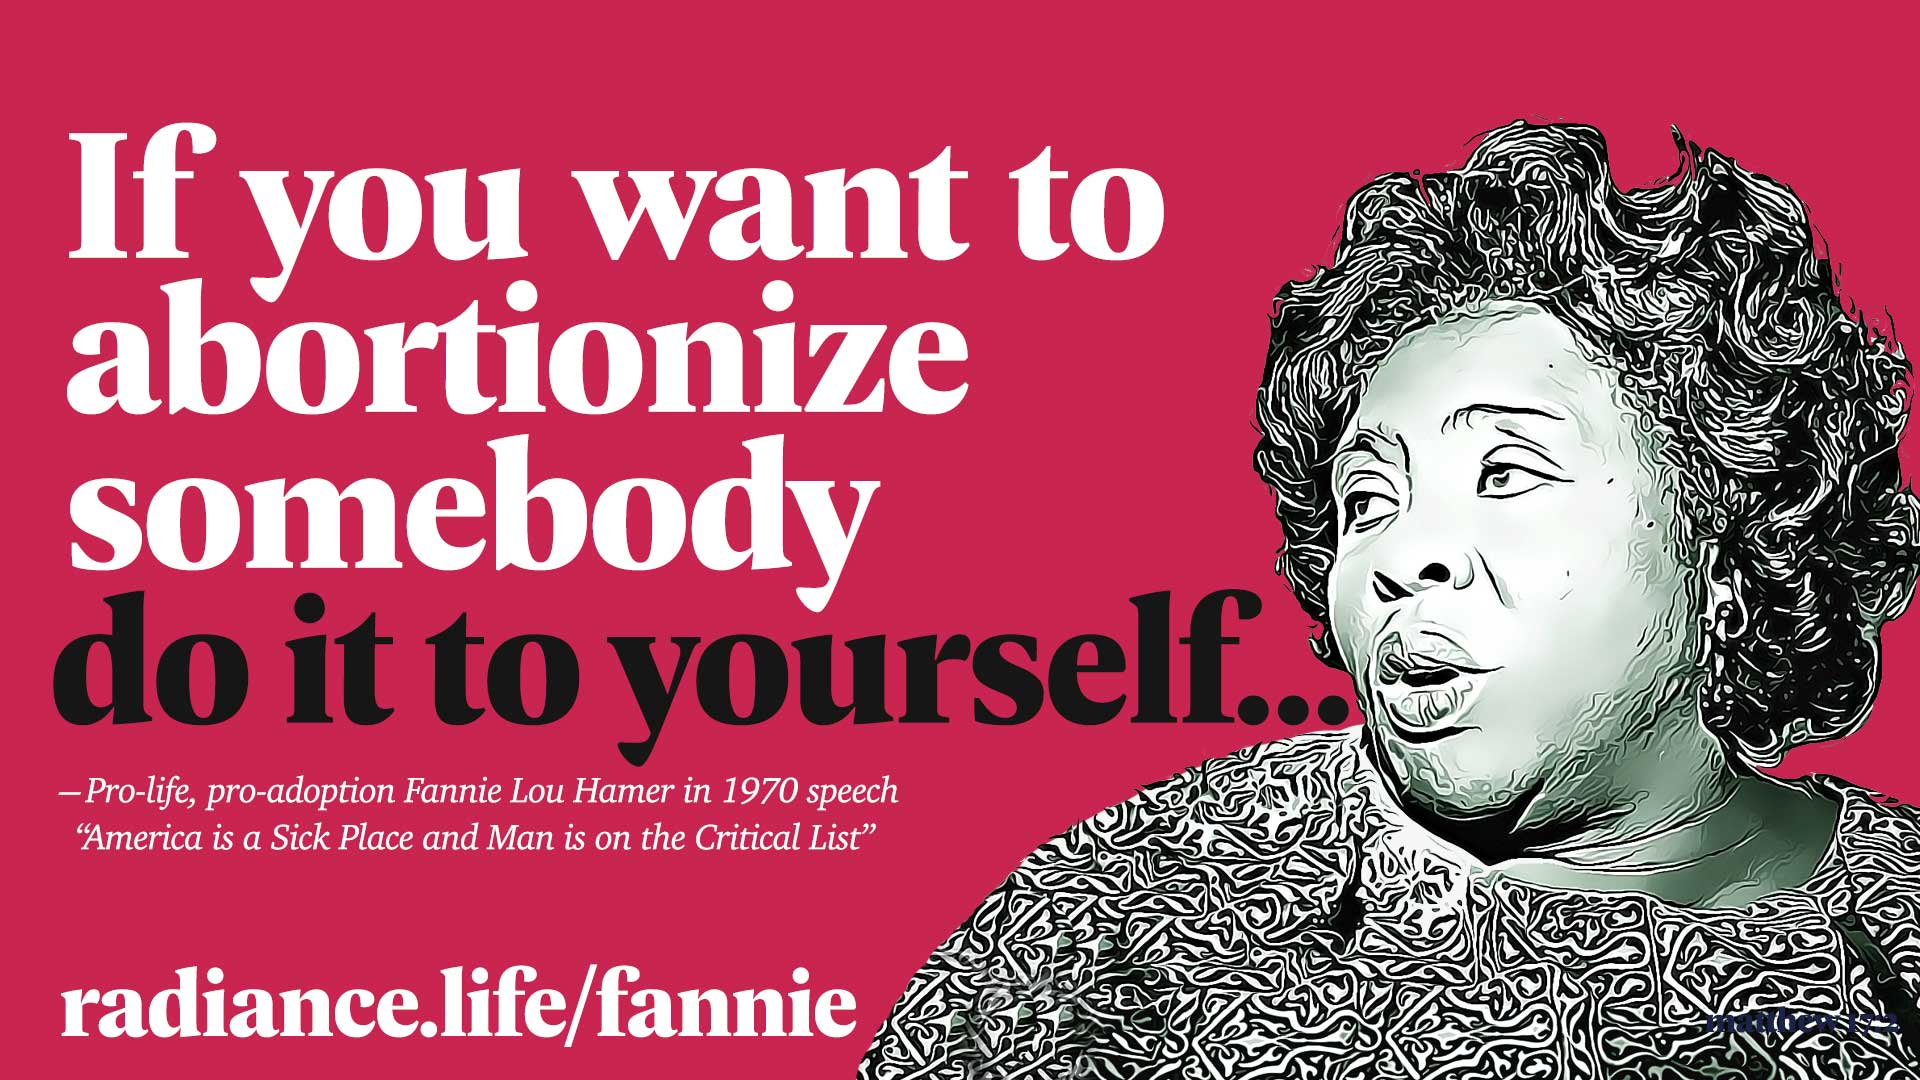 Pro-Life Fannie Lou Hamer - "Abortionize yourself"